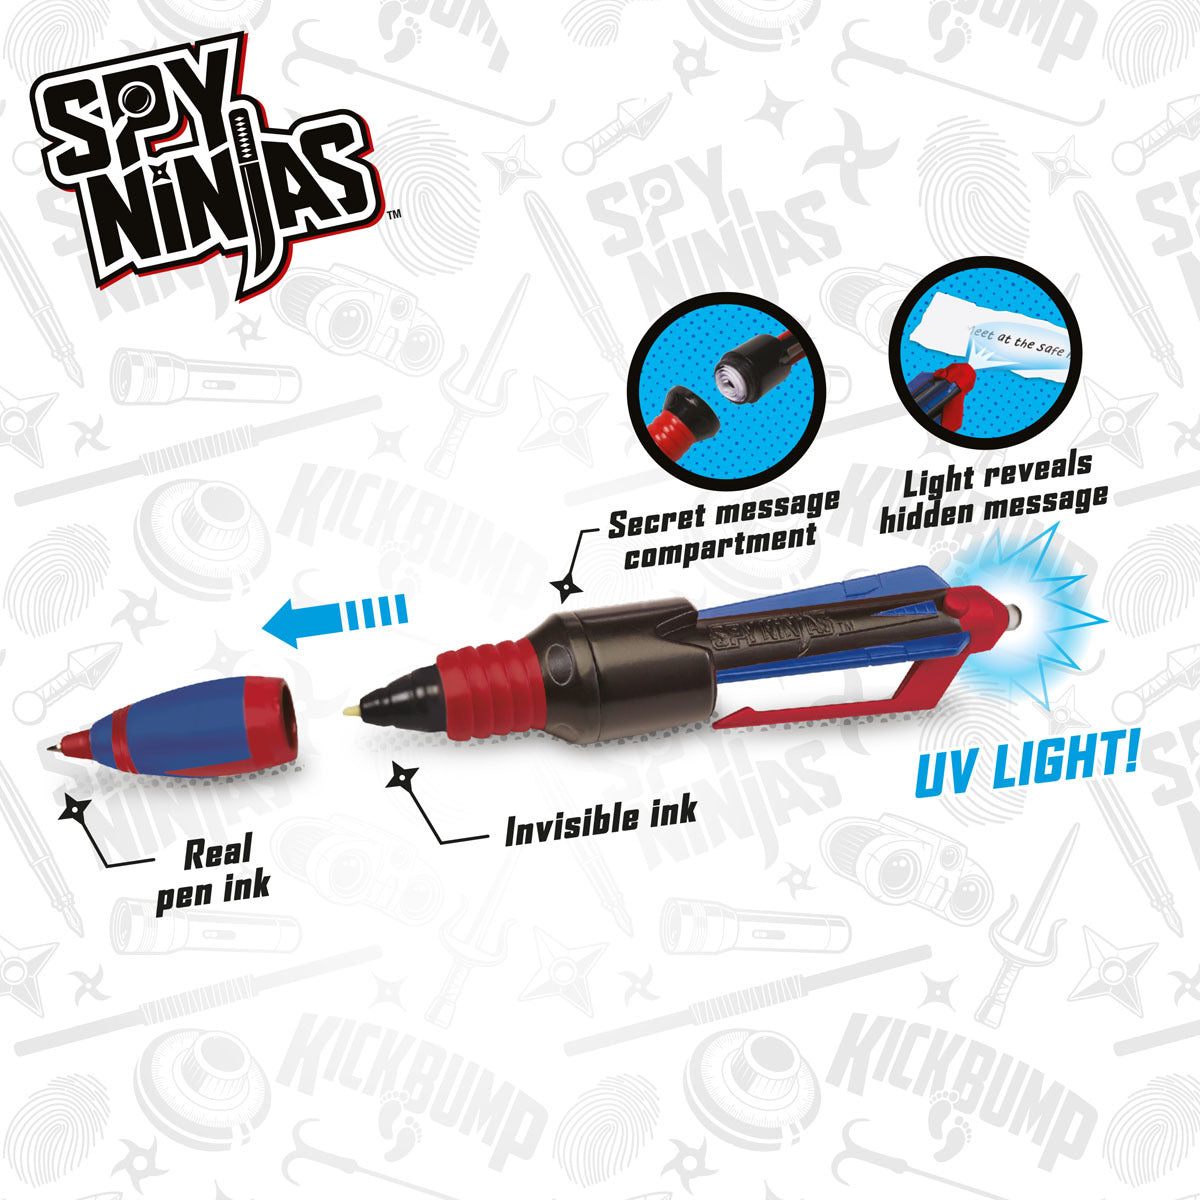 Spy Ninjas - Secret Message Spy Gear Kit From Chad Wild Clay & Vy Qwaint